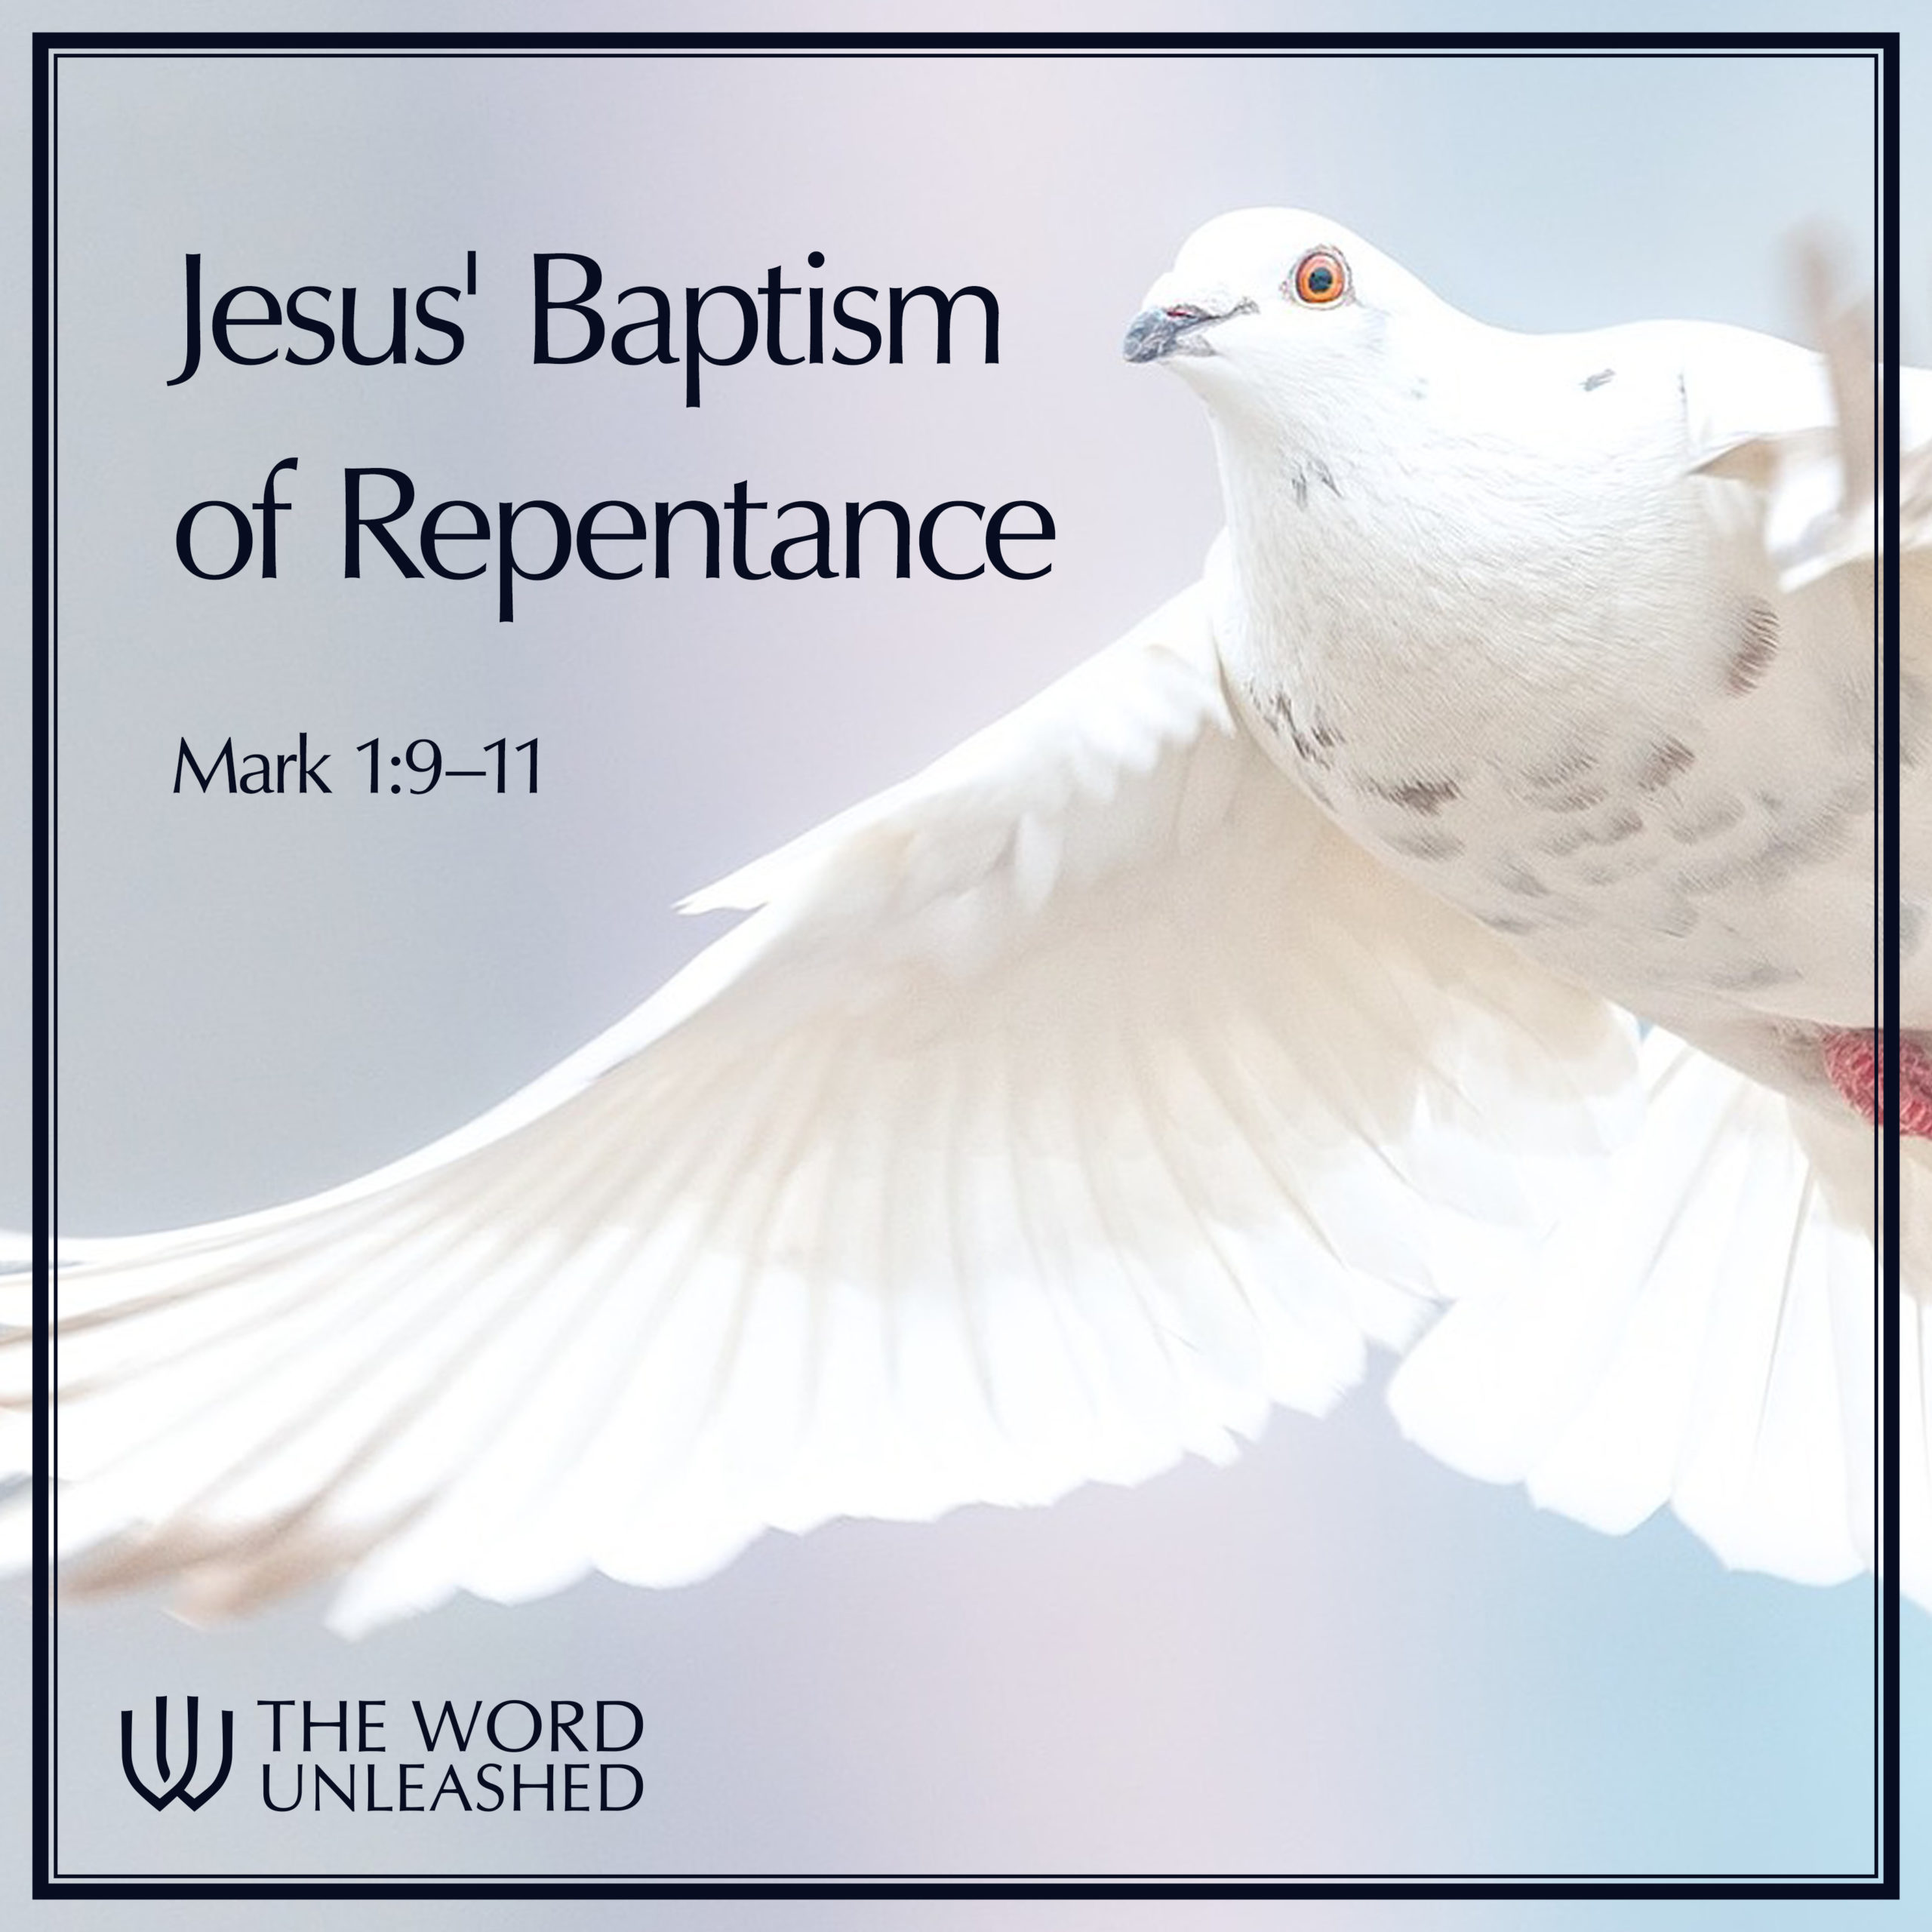 Jesus' Baptism of Repentance